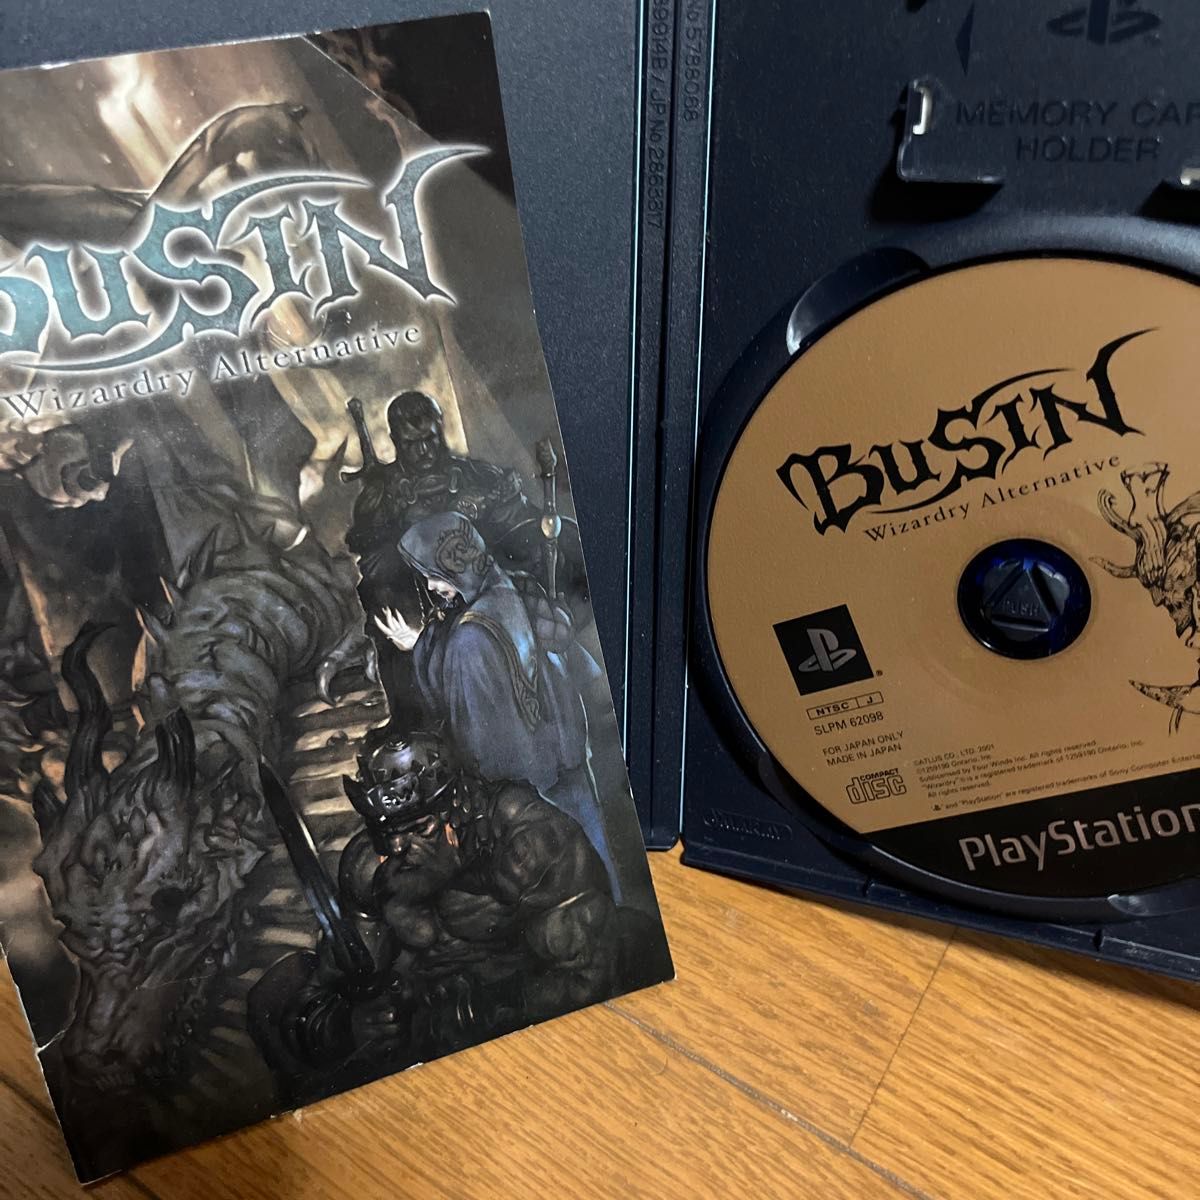 【PS2】 BUSIN ～Wizardry Alternative～  公式公式コンプリートガイドセット